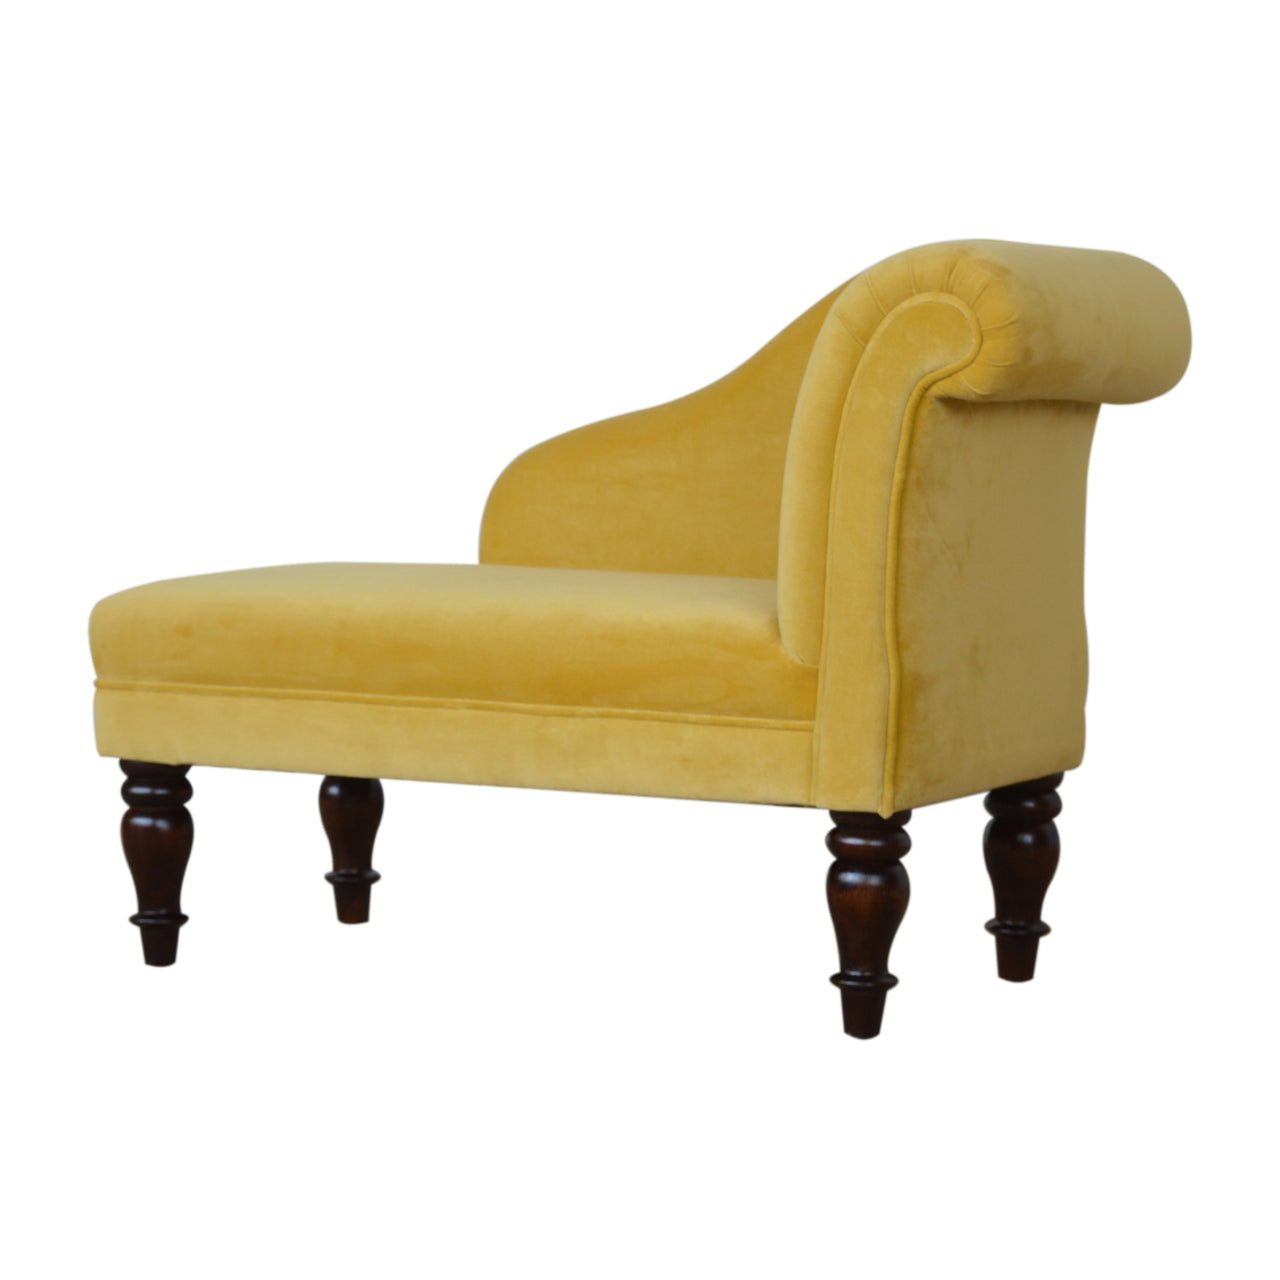 Mustard Velvet Chaise - mancavesuperstore